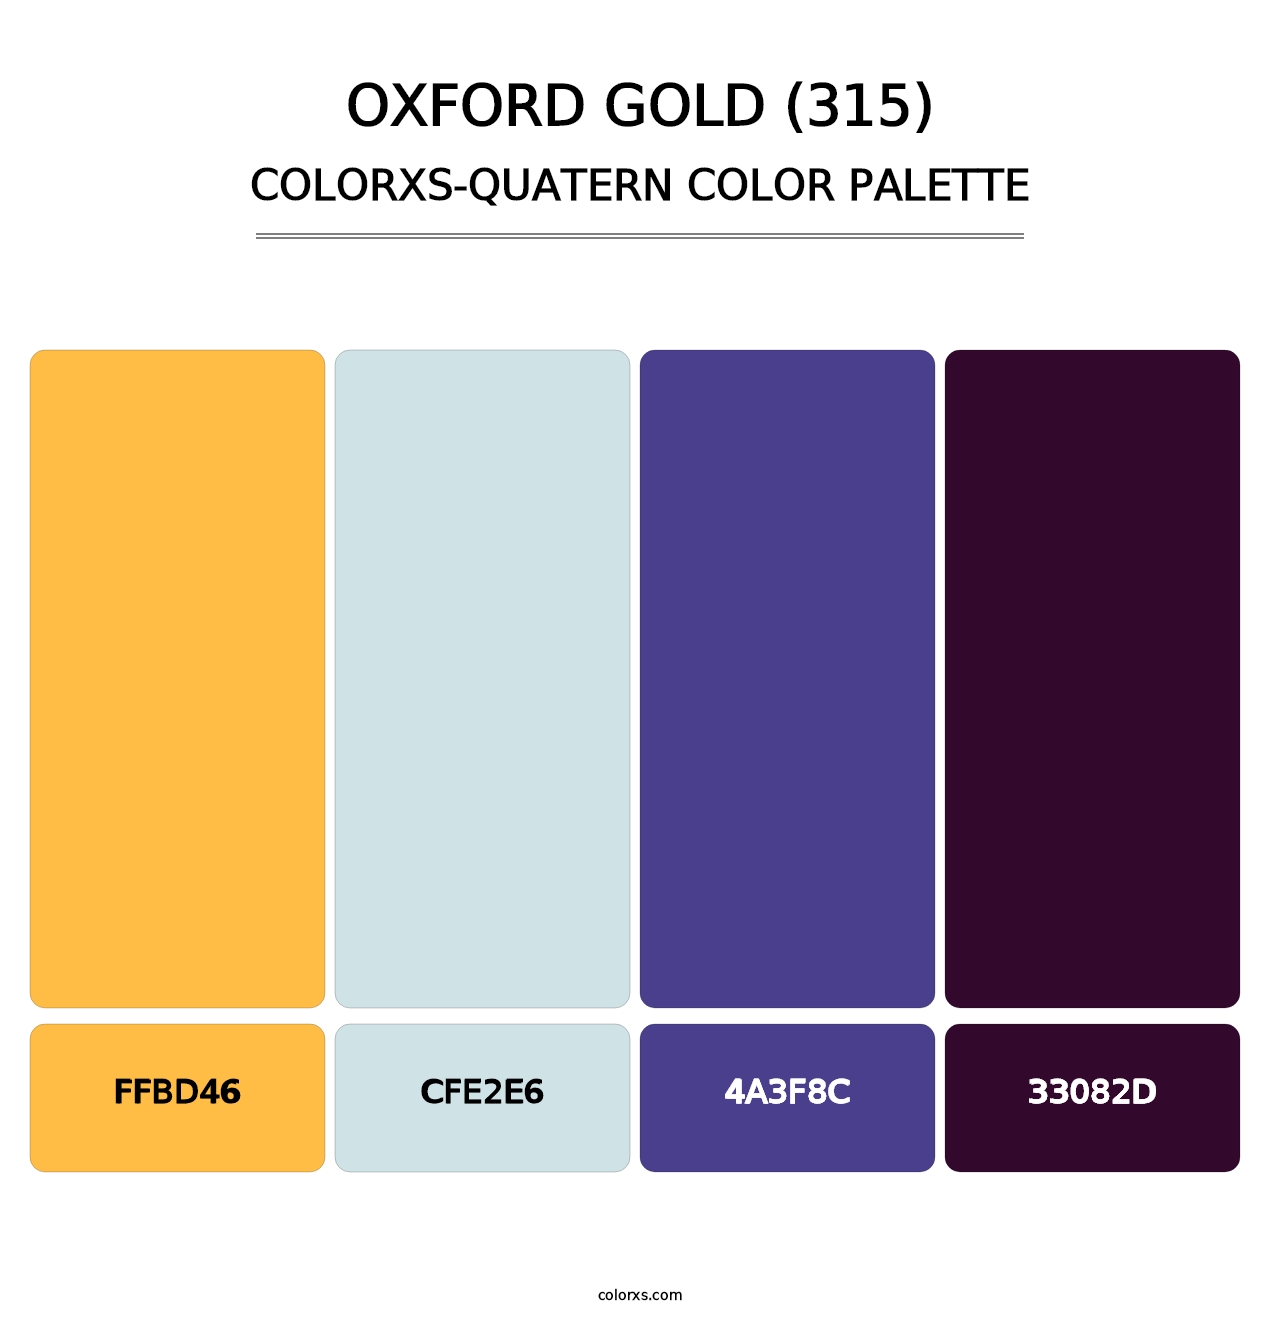 Oxford Gold (315) - Colorxs Quatern Palette